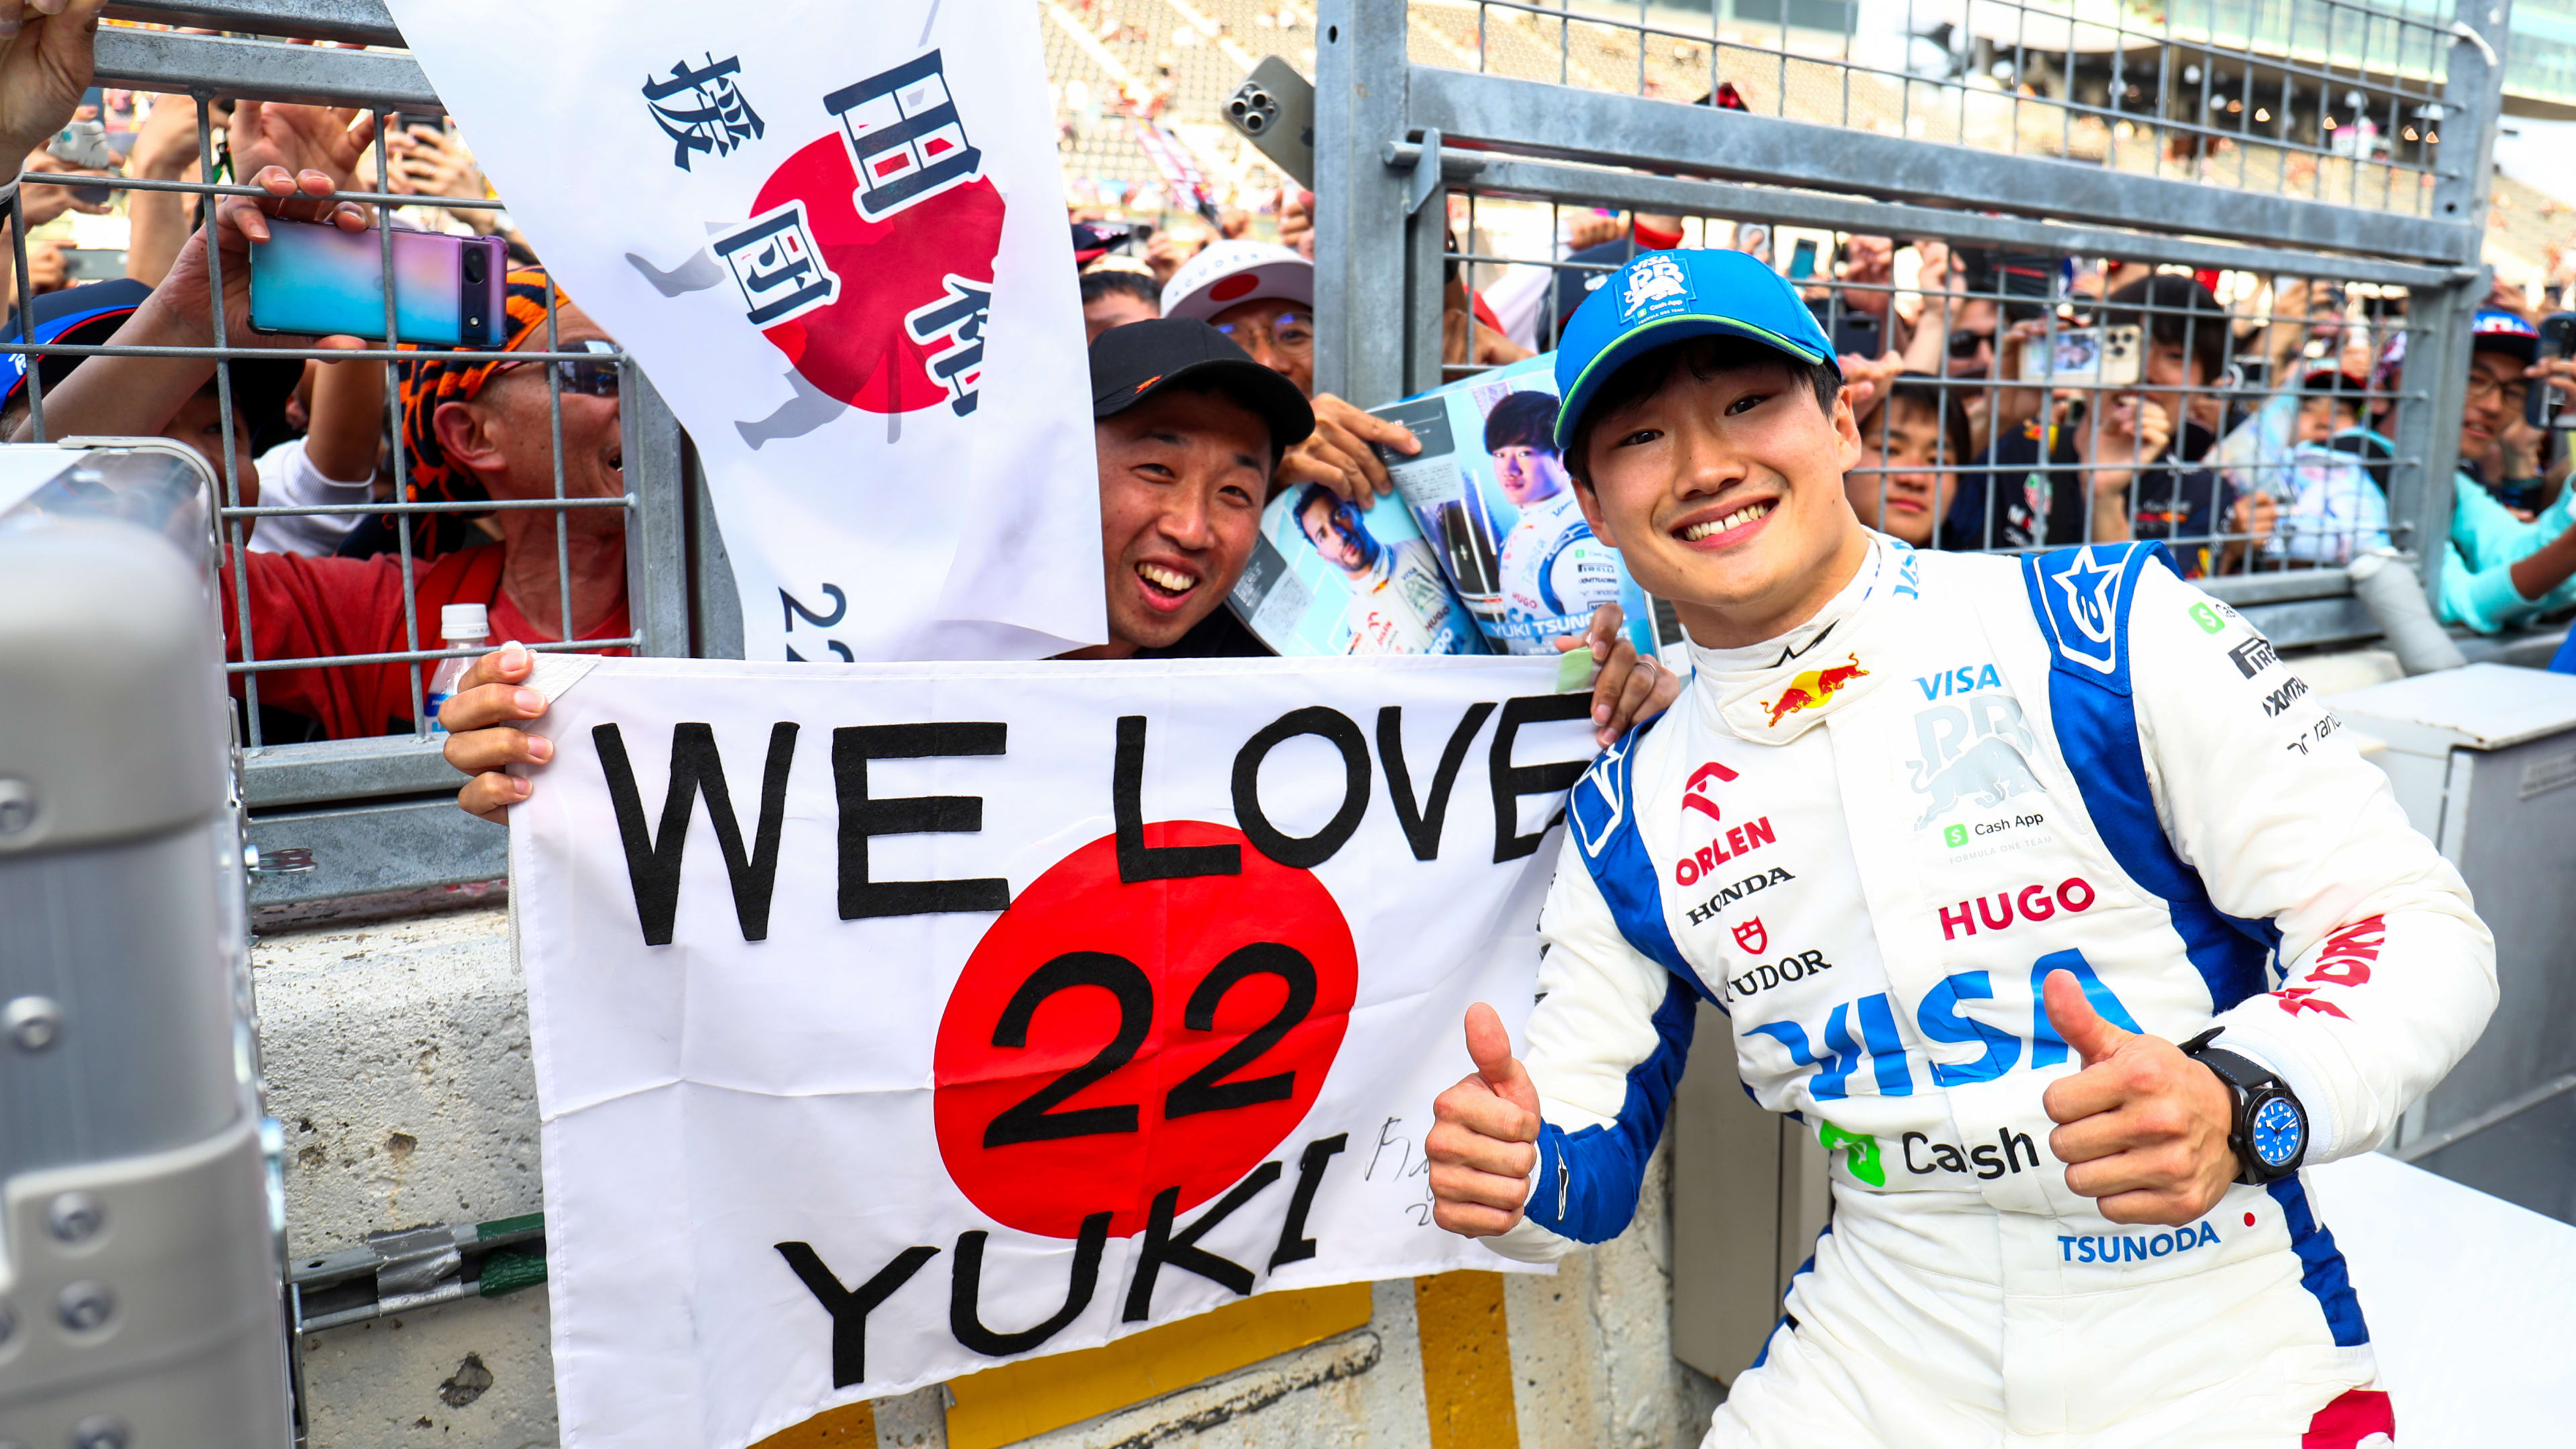 SUZUKA, JAPAN - APRIL 07: Yuki Tsunoda of Scuderia Visa Cash App RB celebrates finishing in 10th